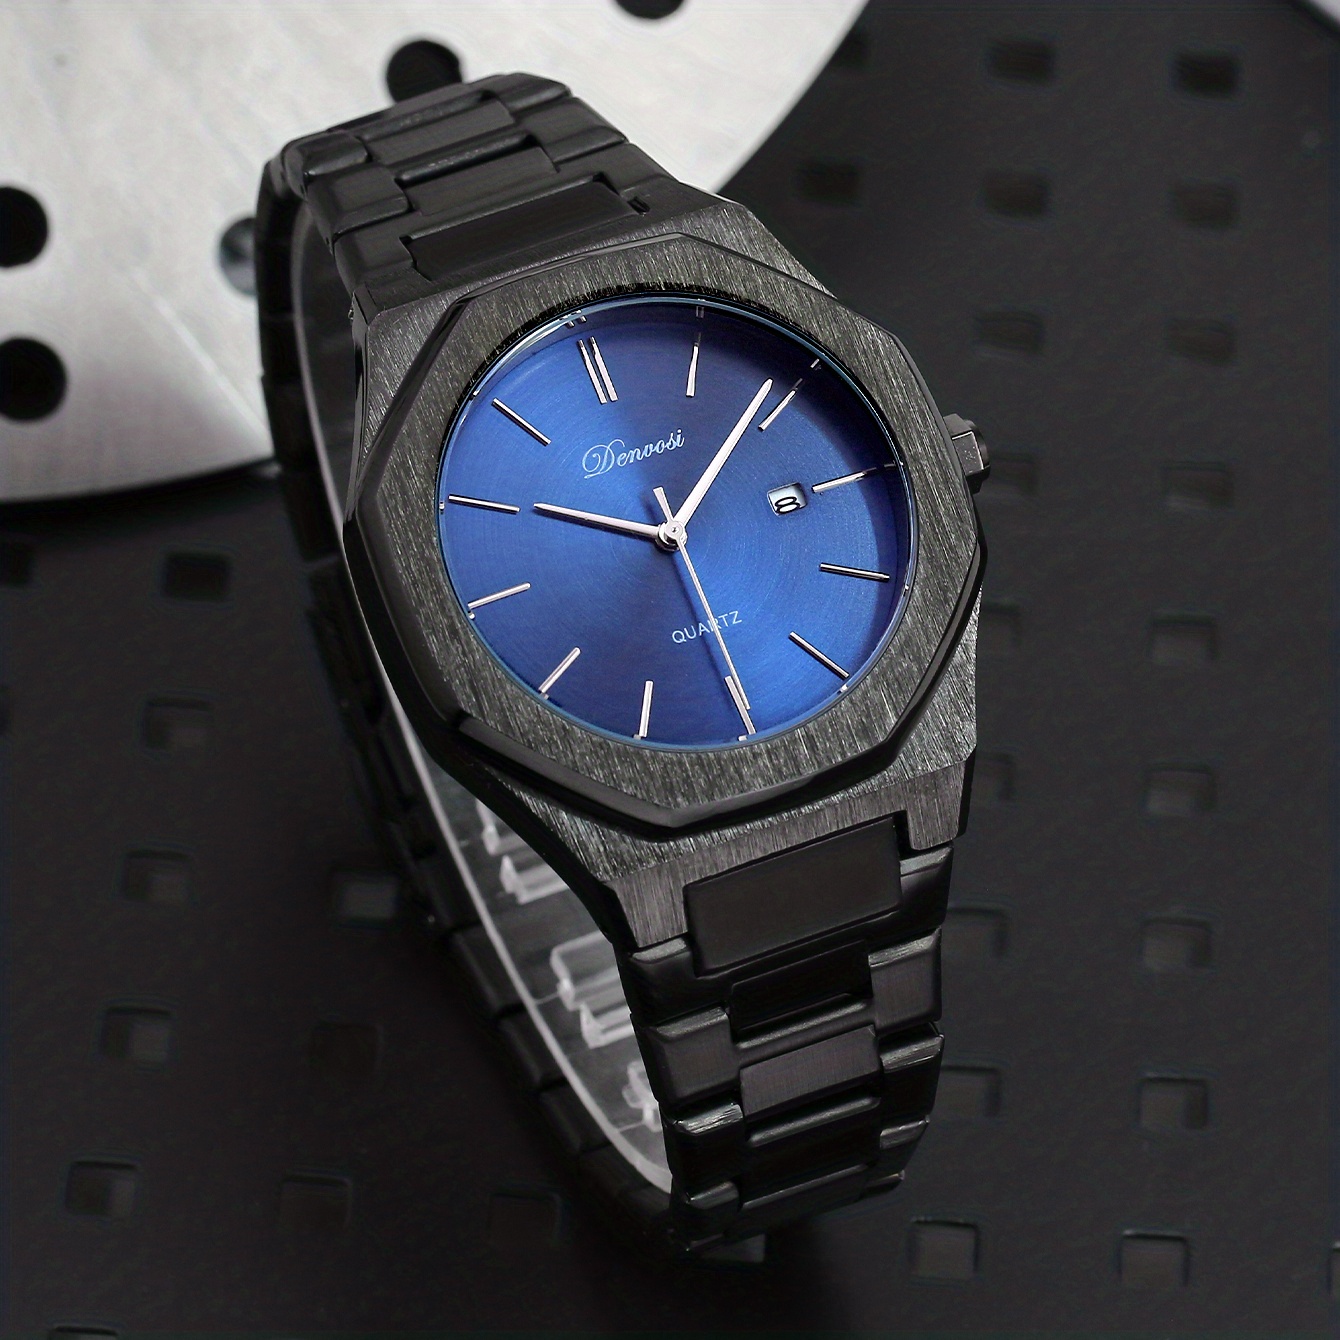 D1 Milano - Watch Polycarbon 40.5 mm - Navy Blue